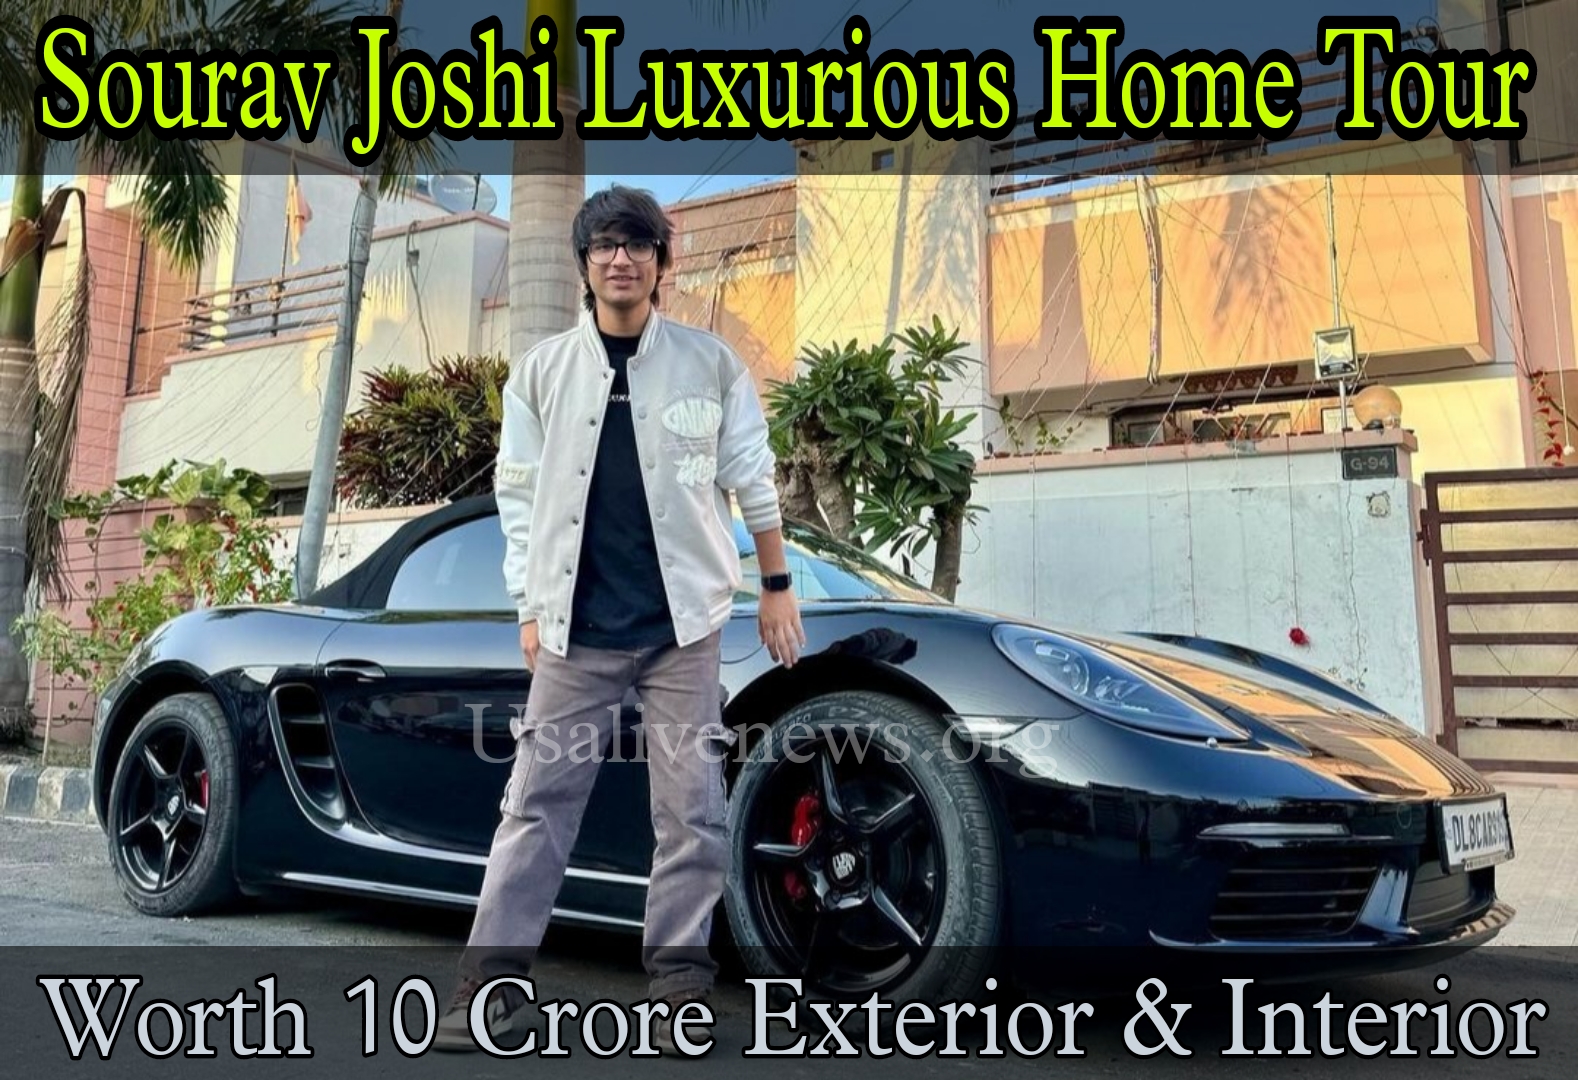 Sourav Joshi Luxurious Home Tour Worth 10 Crore : Exterior, Interiors. A Glimpse into Extravagance